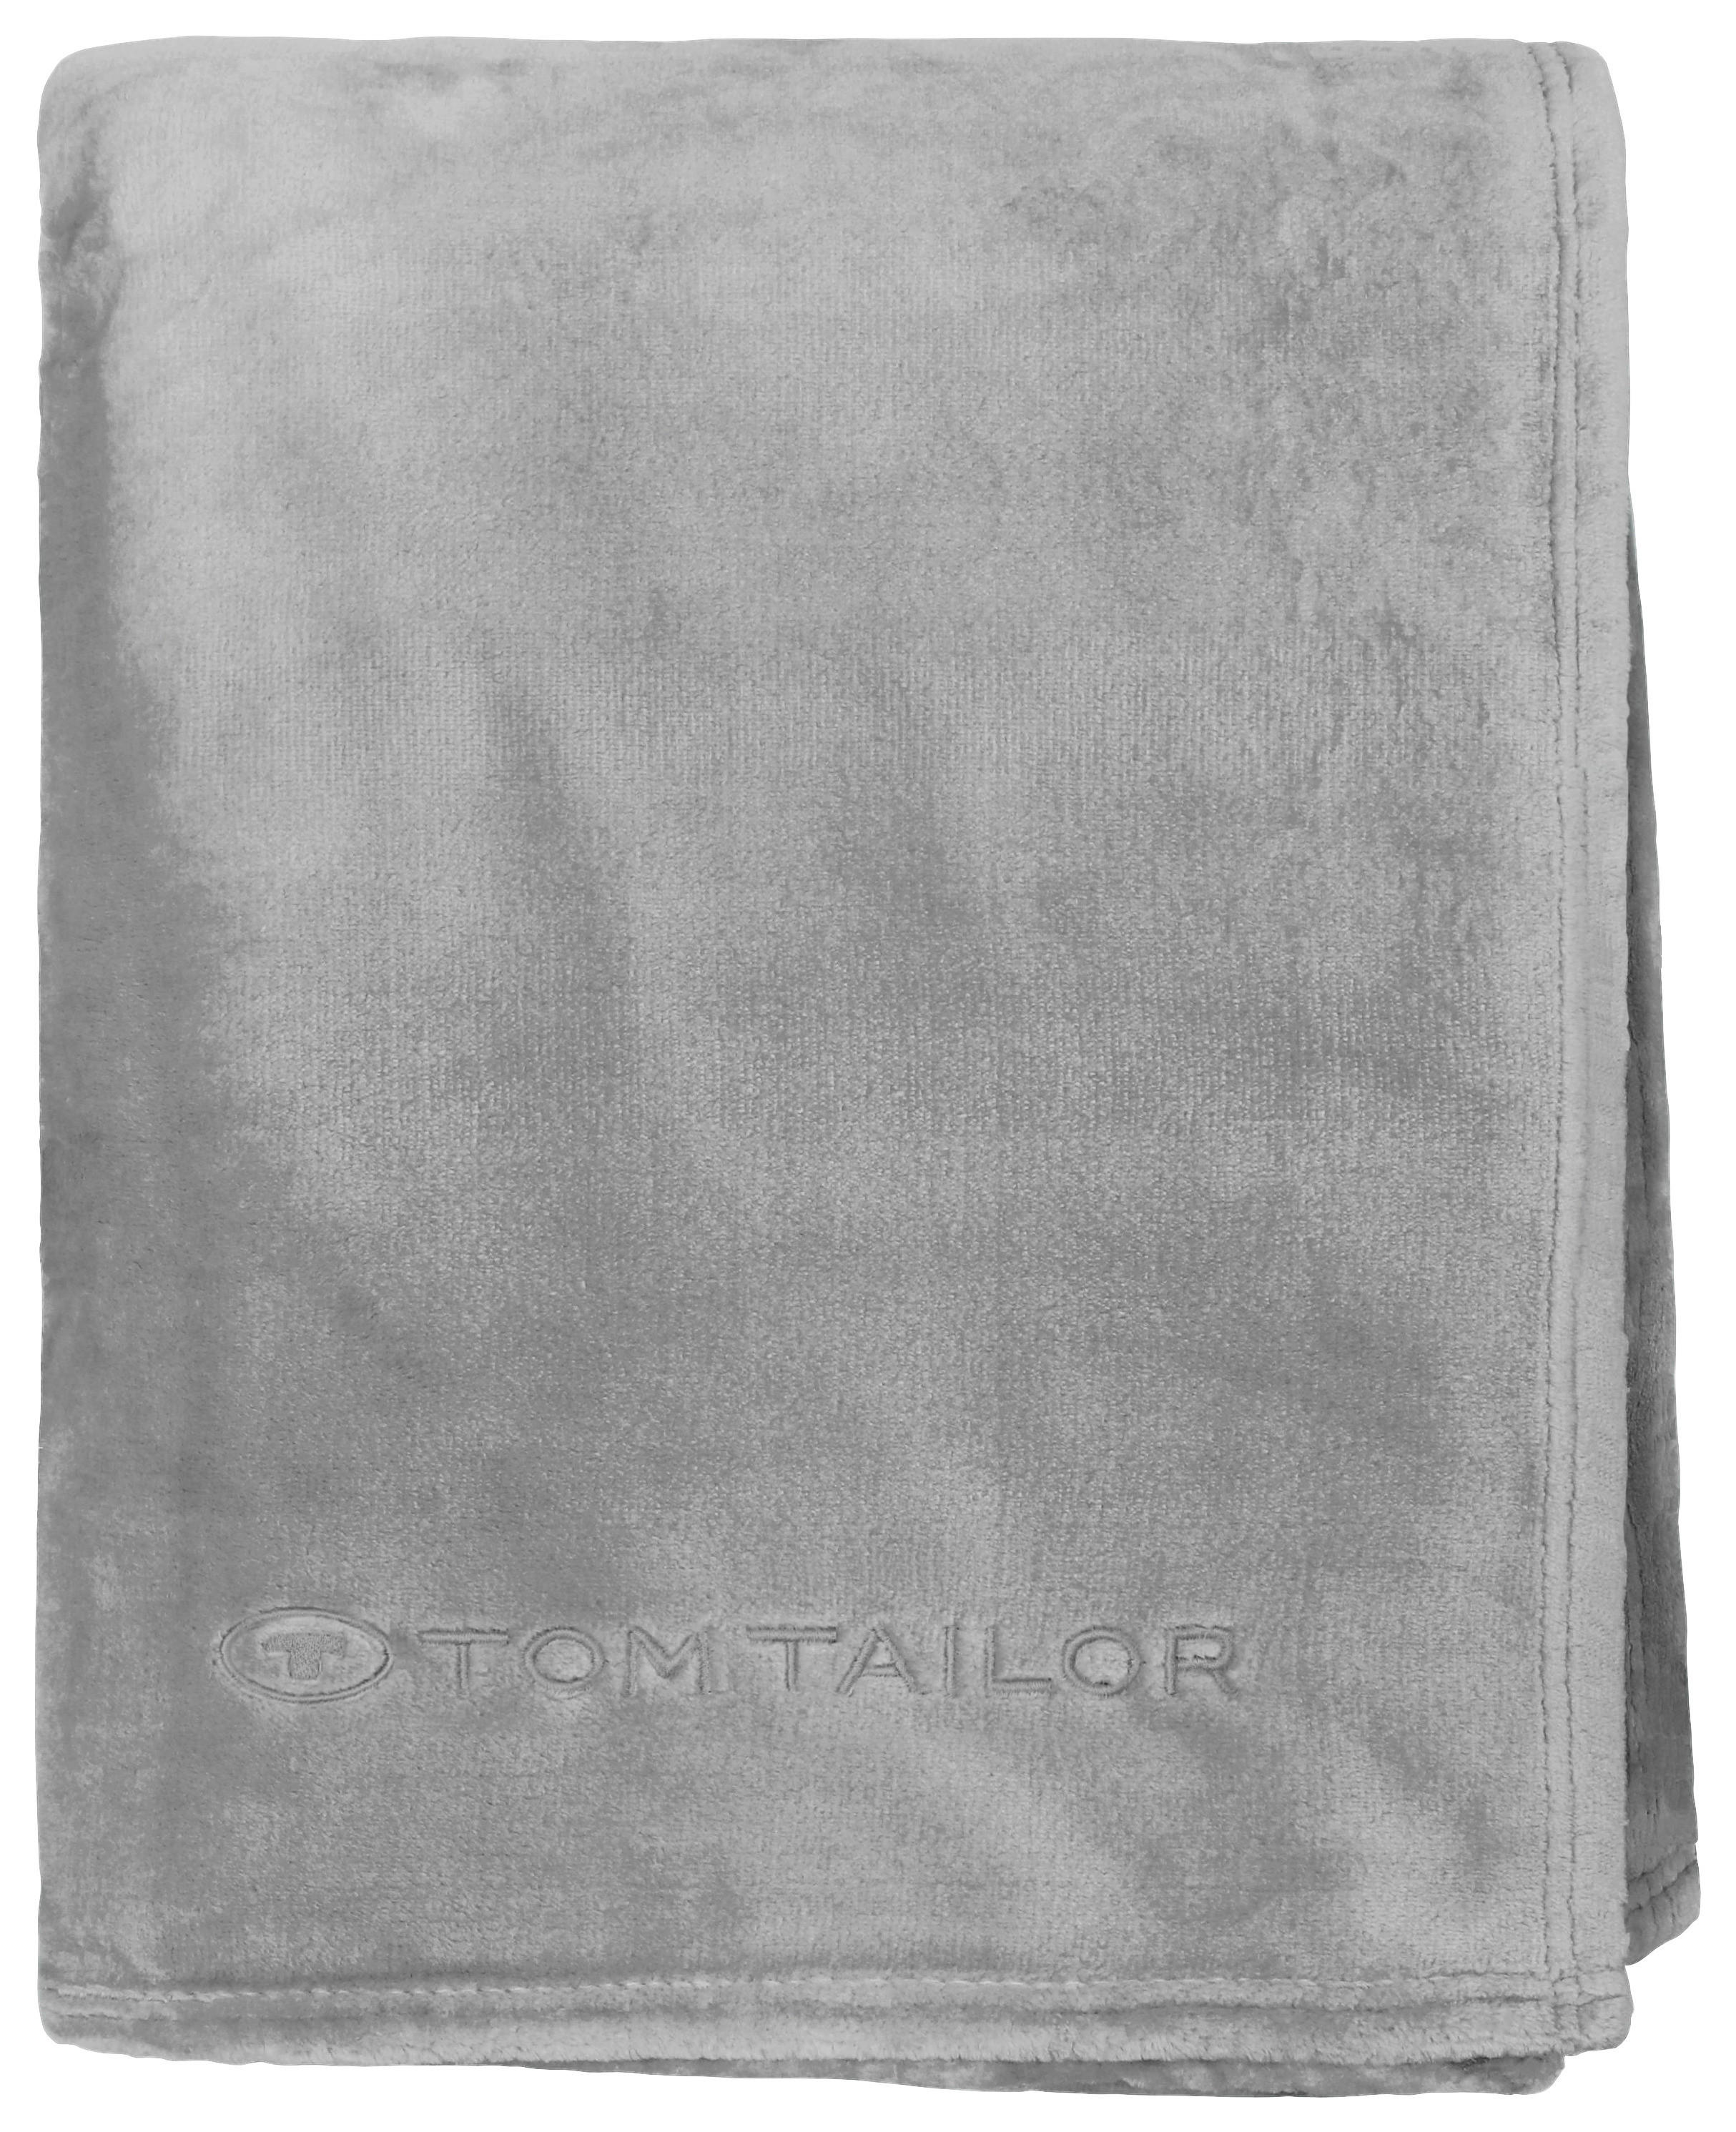 WOHNDECKE 237798 150X200 Hellgrau  - Hellgrau, KONVENTIONELL, Textil (40/40/10cm) - Tom Tailor